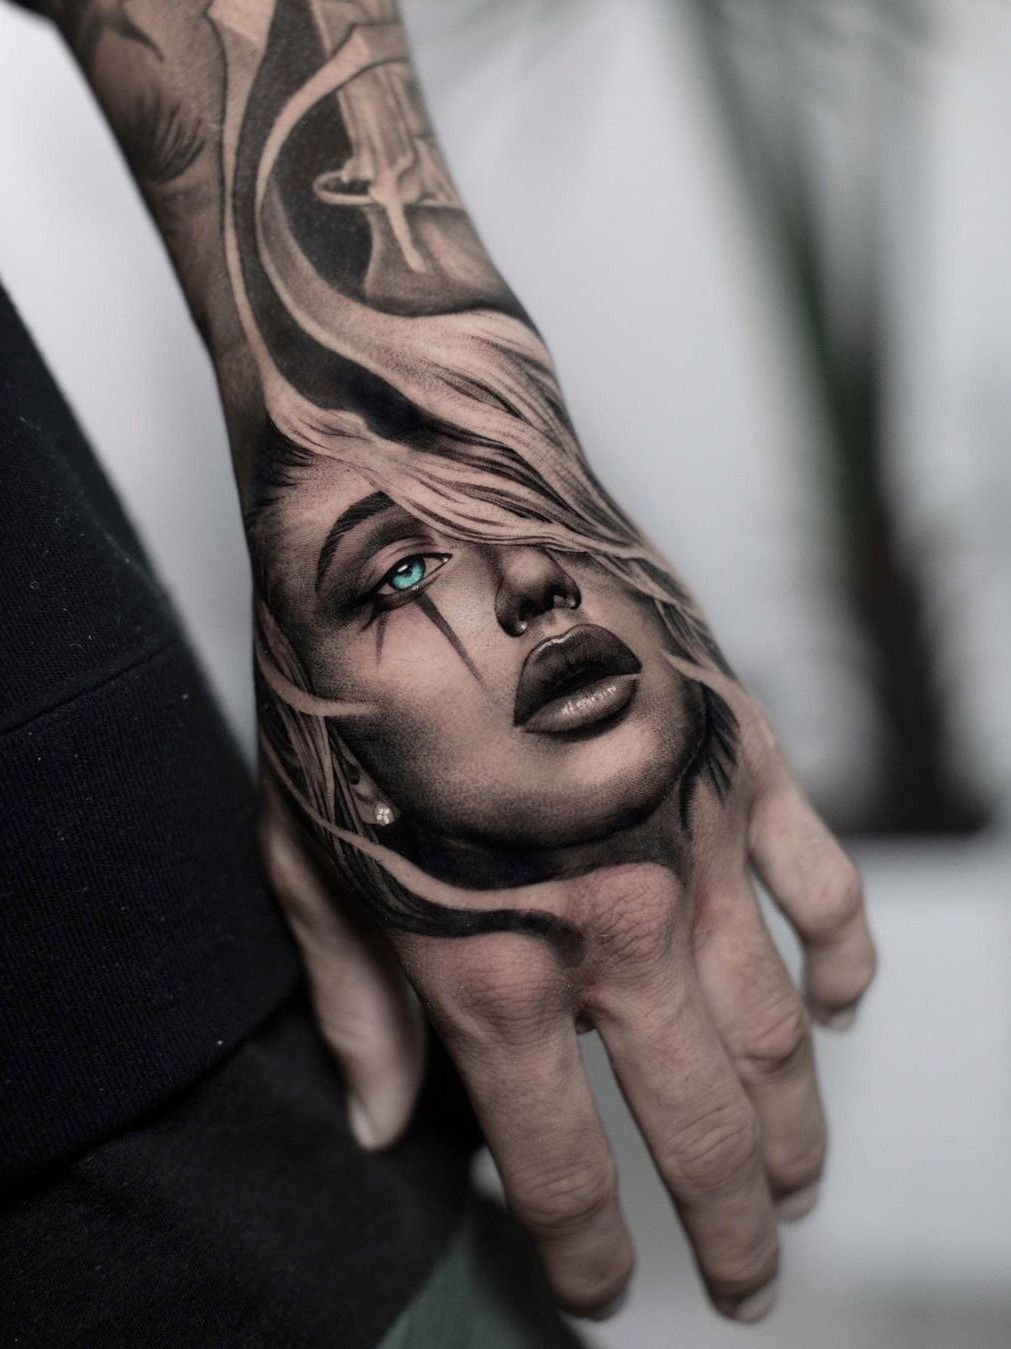 Art on Tumblr: Amazing artist Daniel Silva @danielsilvatattoos from Los  Angeles awesome Siberian turquoise eyes tiger mandala arm tattoo!